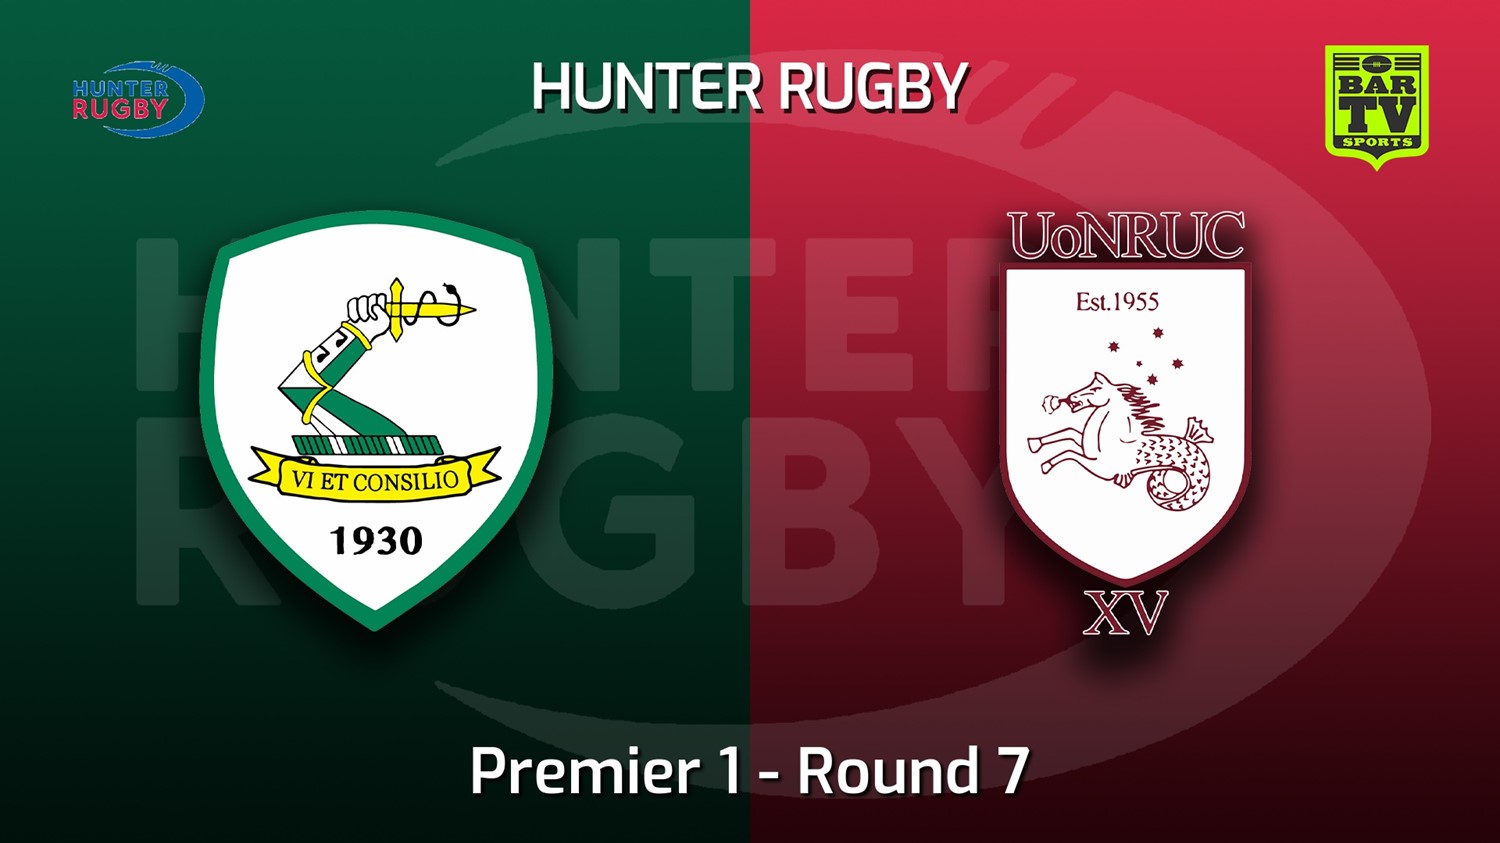 220604-Hunter Rugby Round 7 - Premier 1 - Merewether Carlton v University Of Newcastle Slate Image